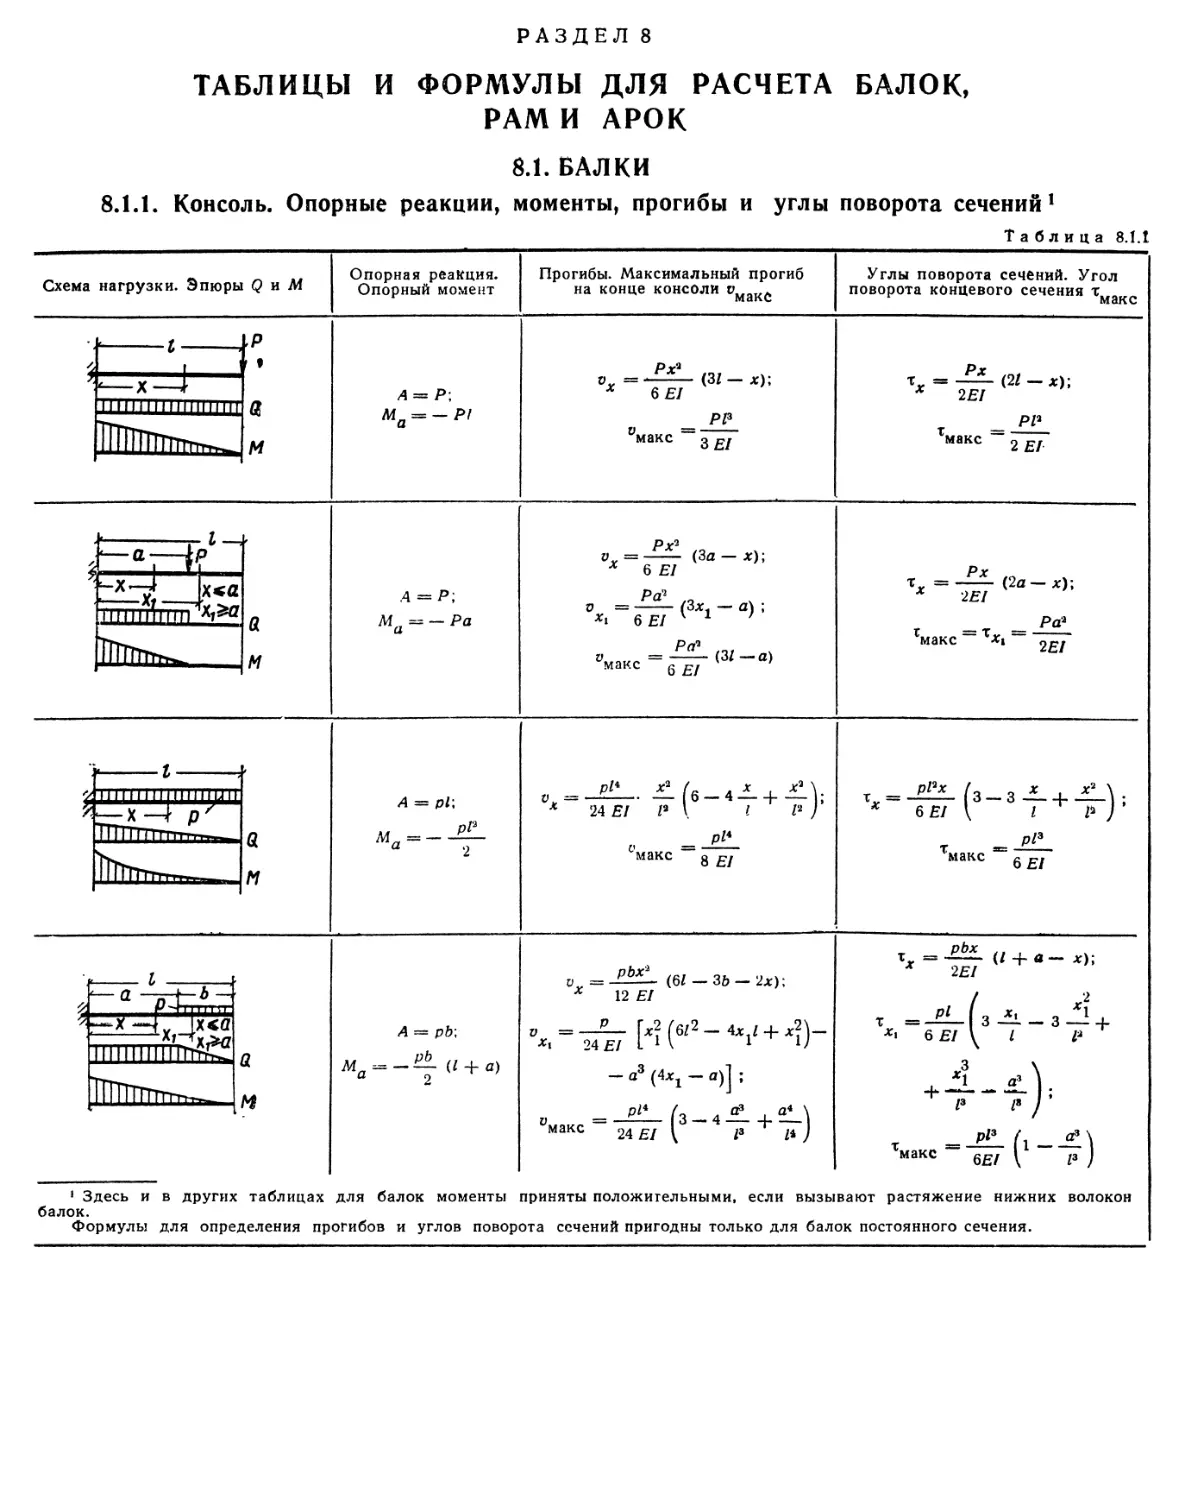 8. Таблицы и формулы для расчёта балок, рам и арок